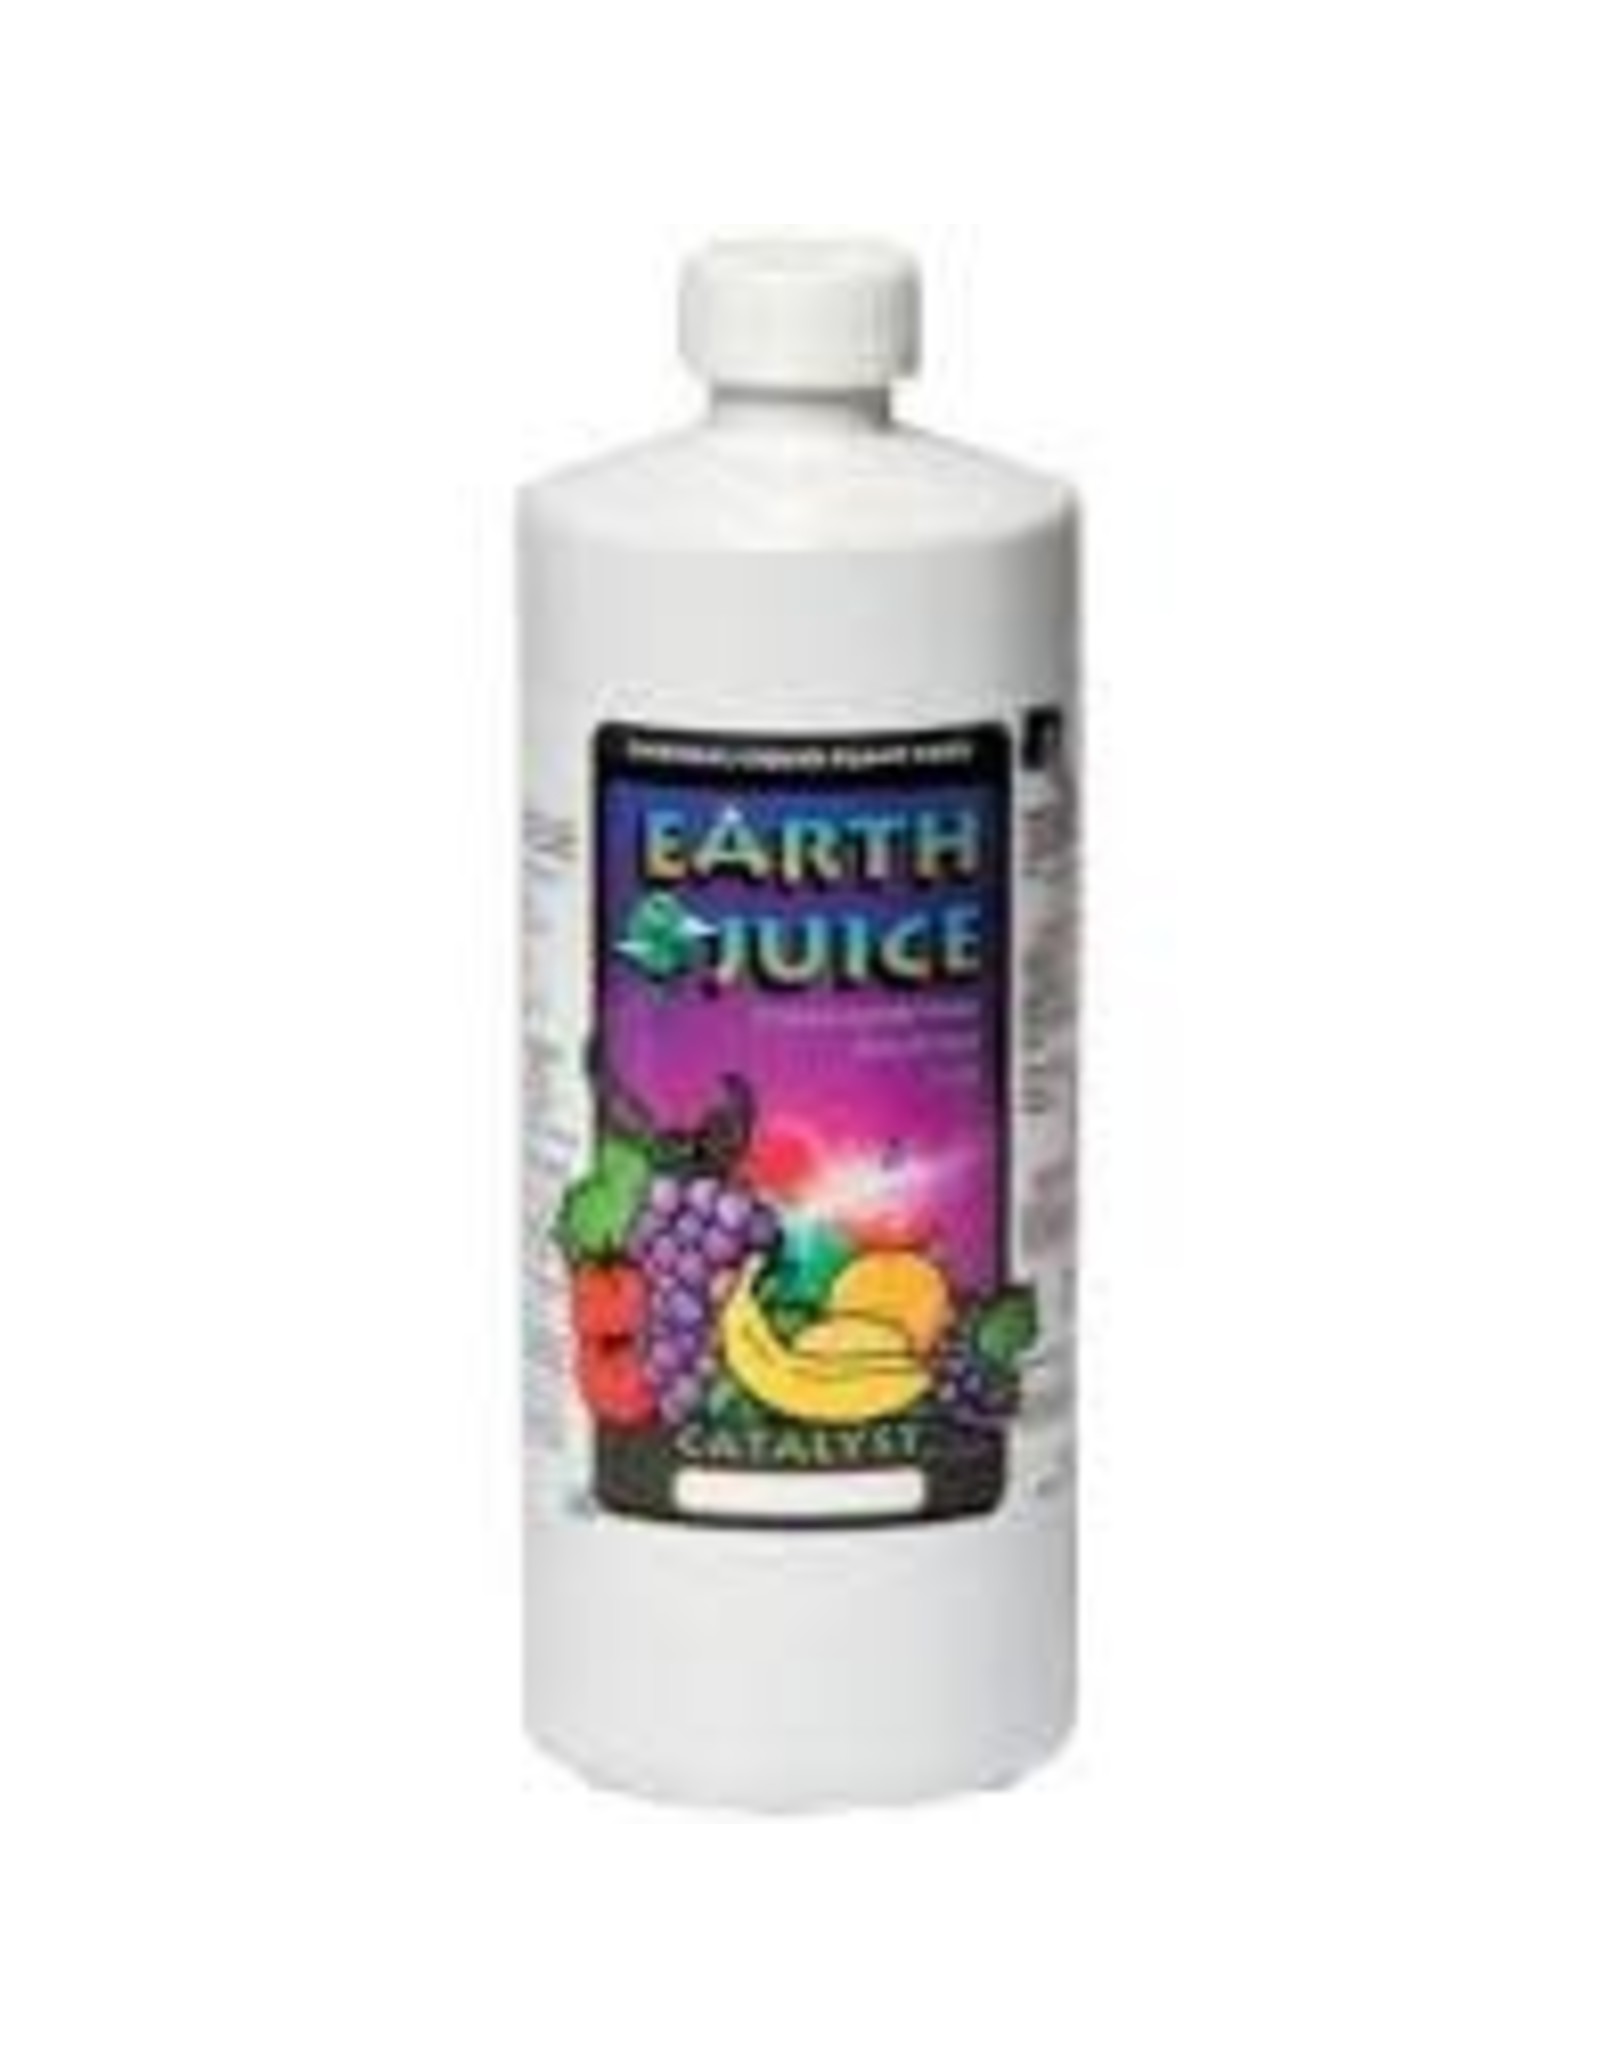 Earth Juice Earth Juice Xatalyst, 1 qt